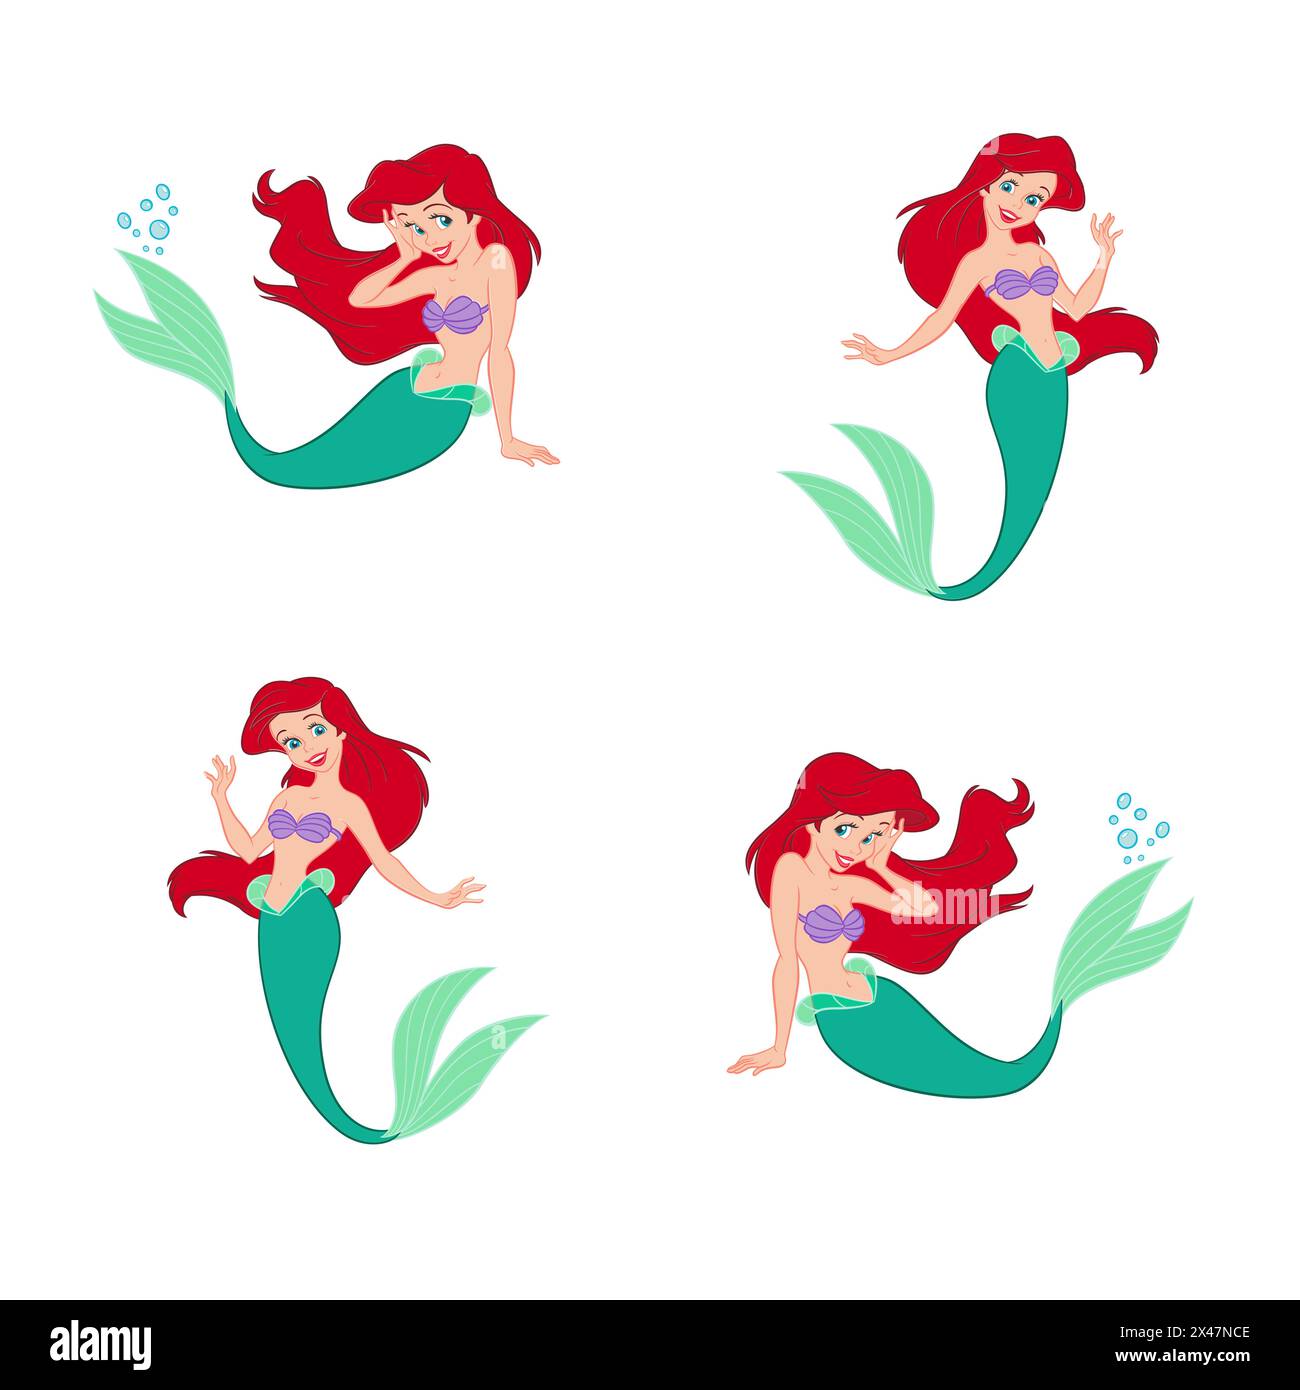 Disney princess set ariel mermaid fairy tale fantasy vector illustration Stock Vector